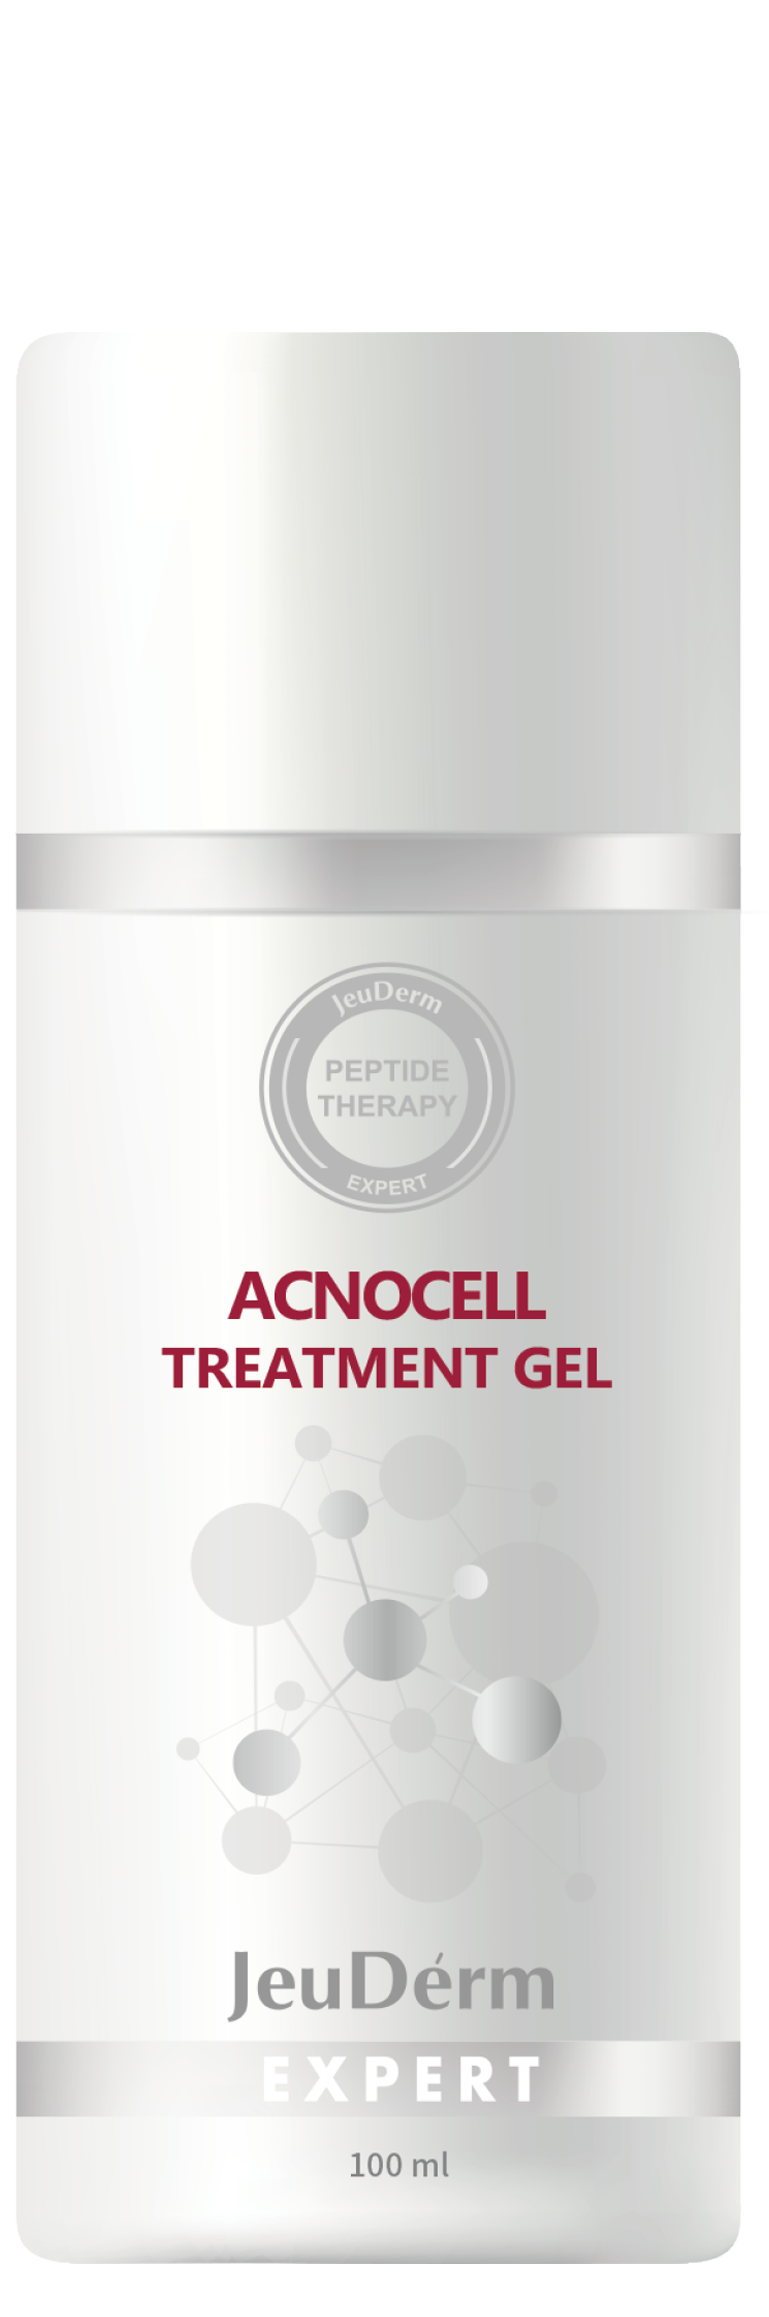 Acnocell Treatment gel